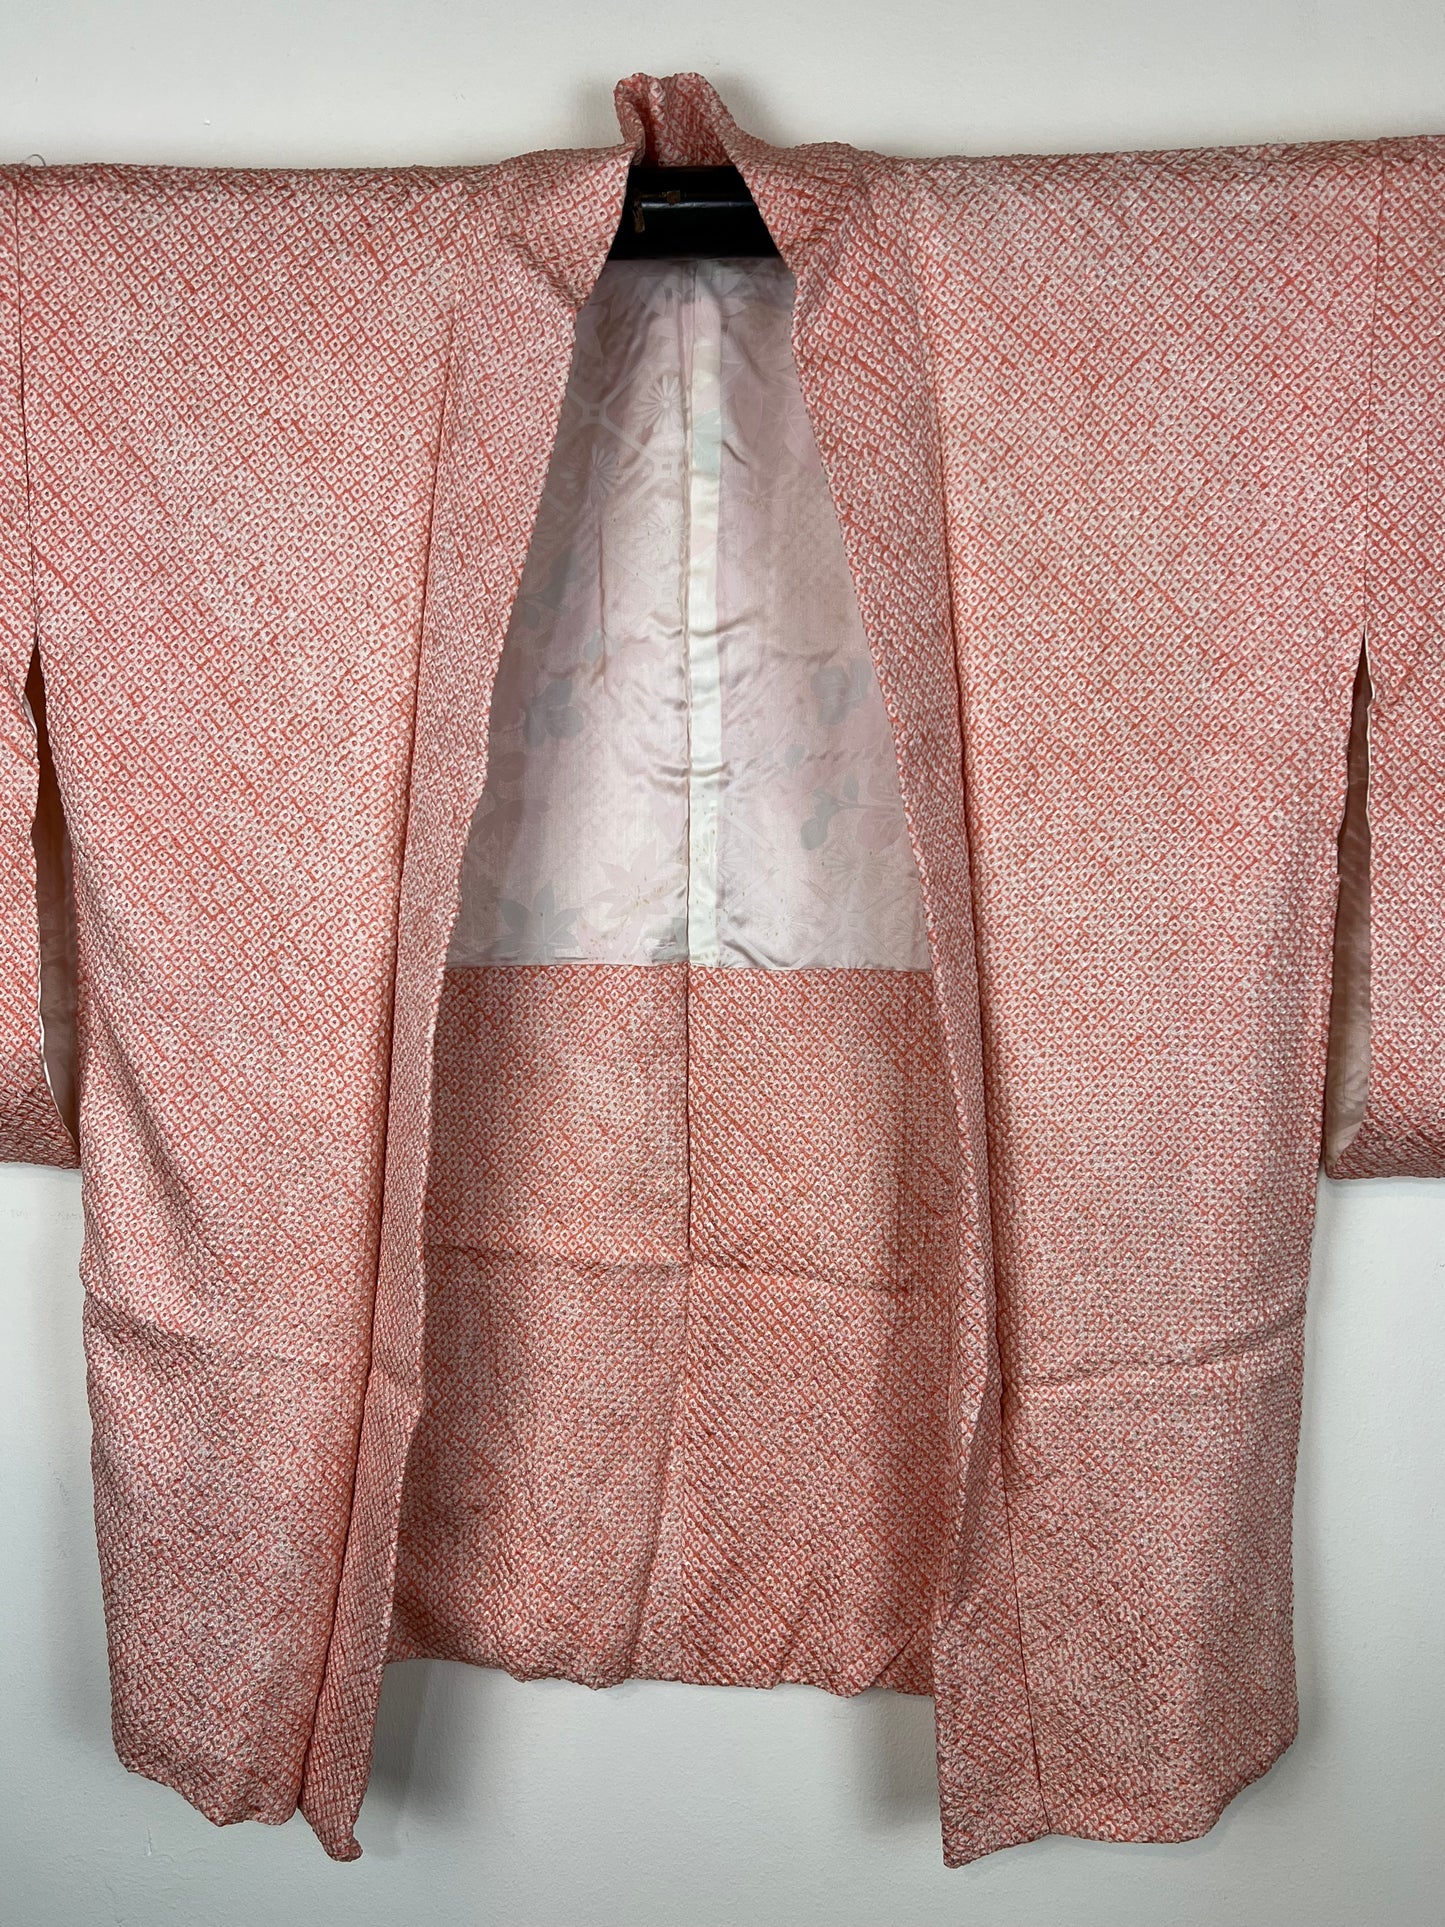 Vintage Japanese Silk Haori Coat in Shibori Tie-dye Style Soft Pink 28"L